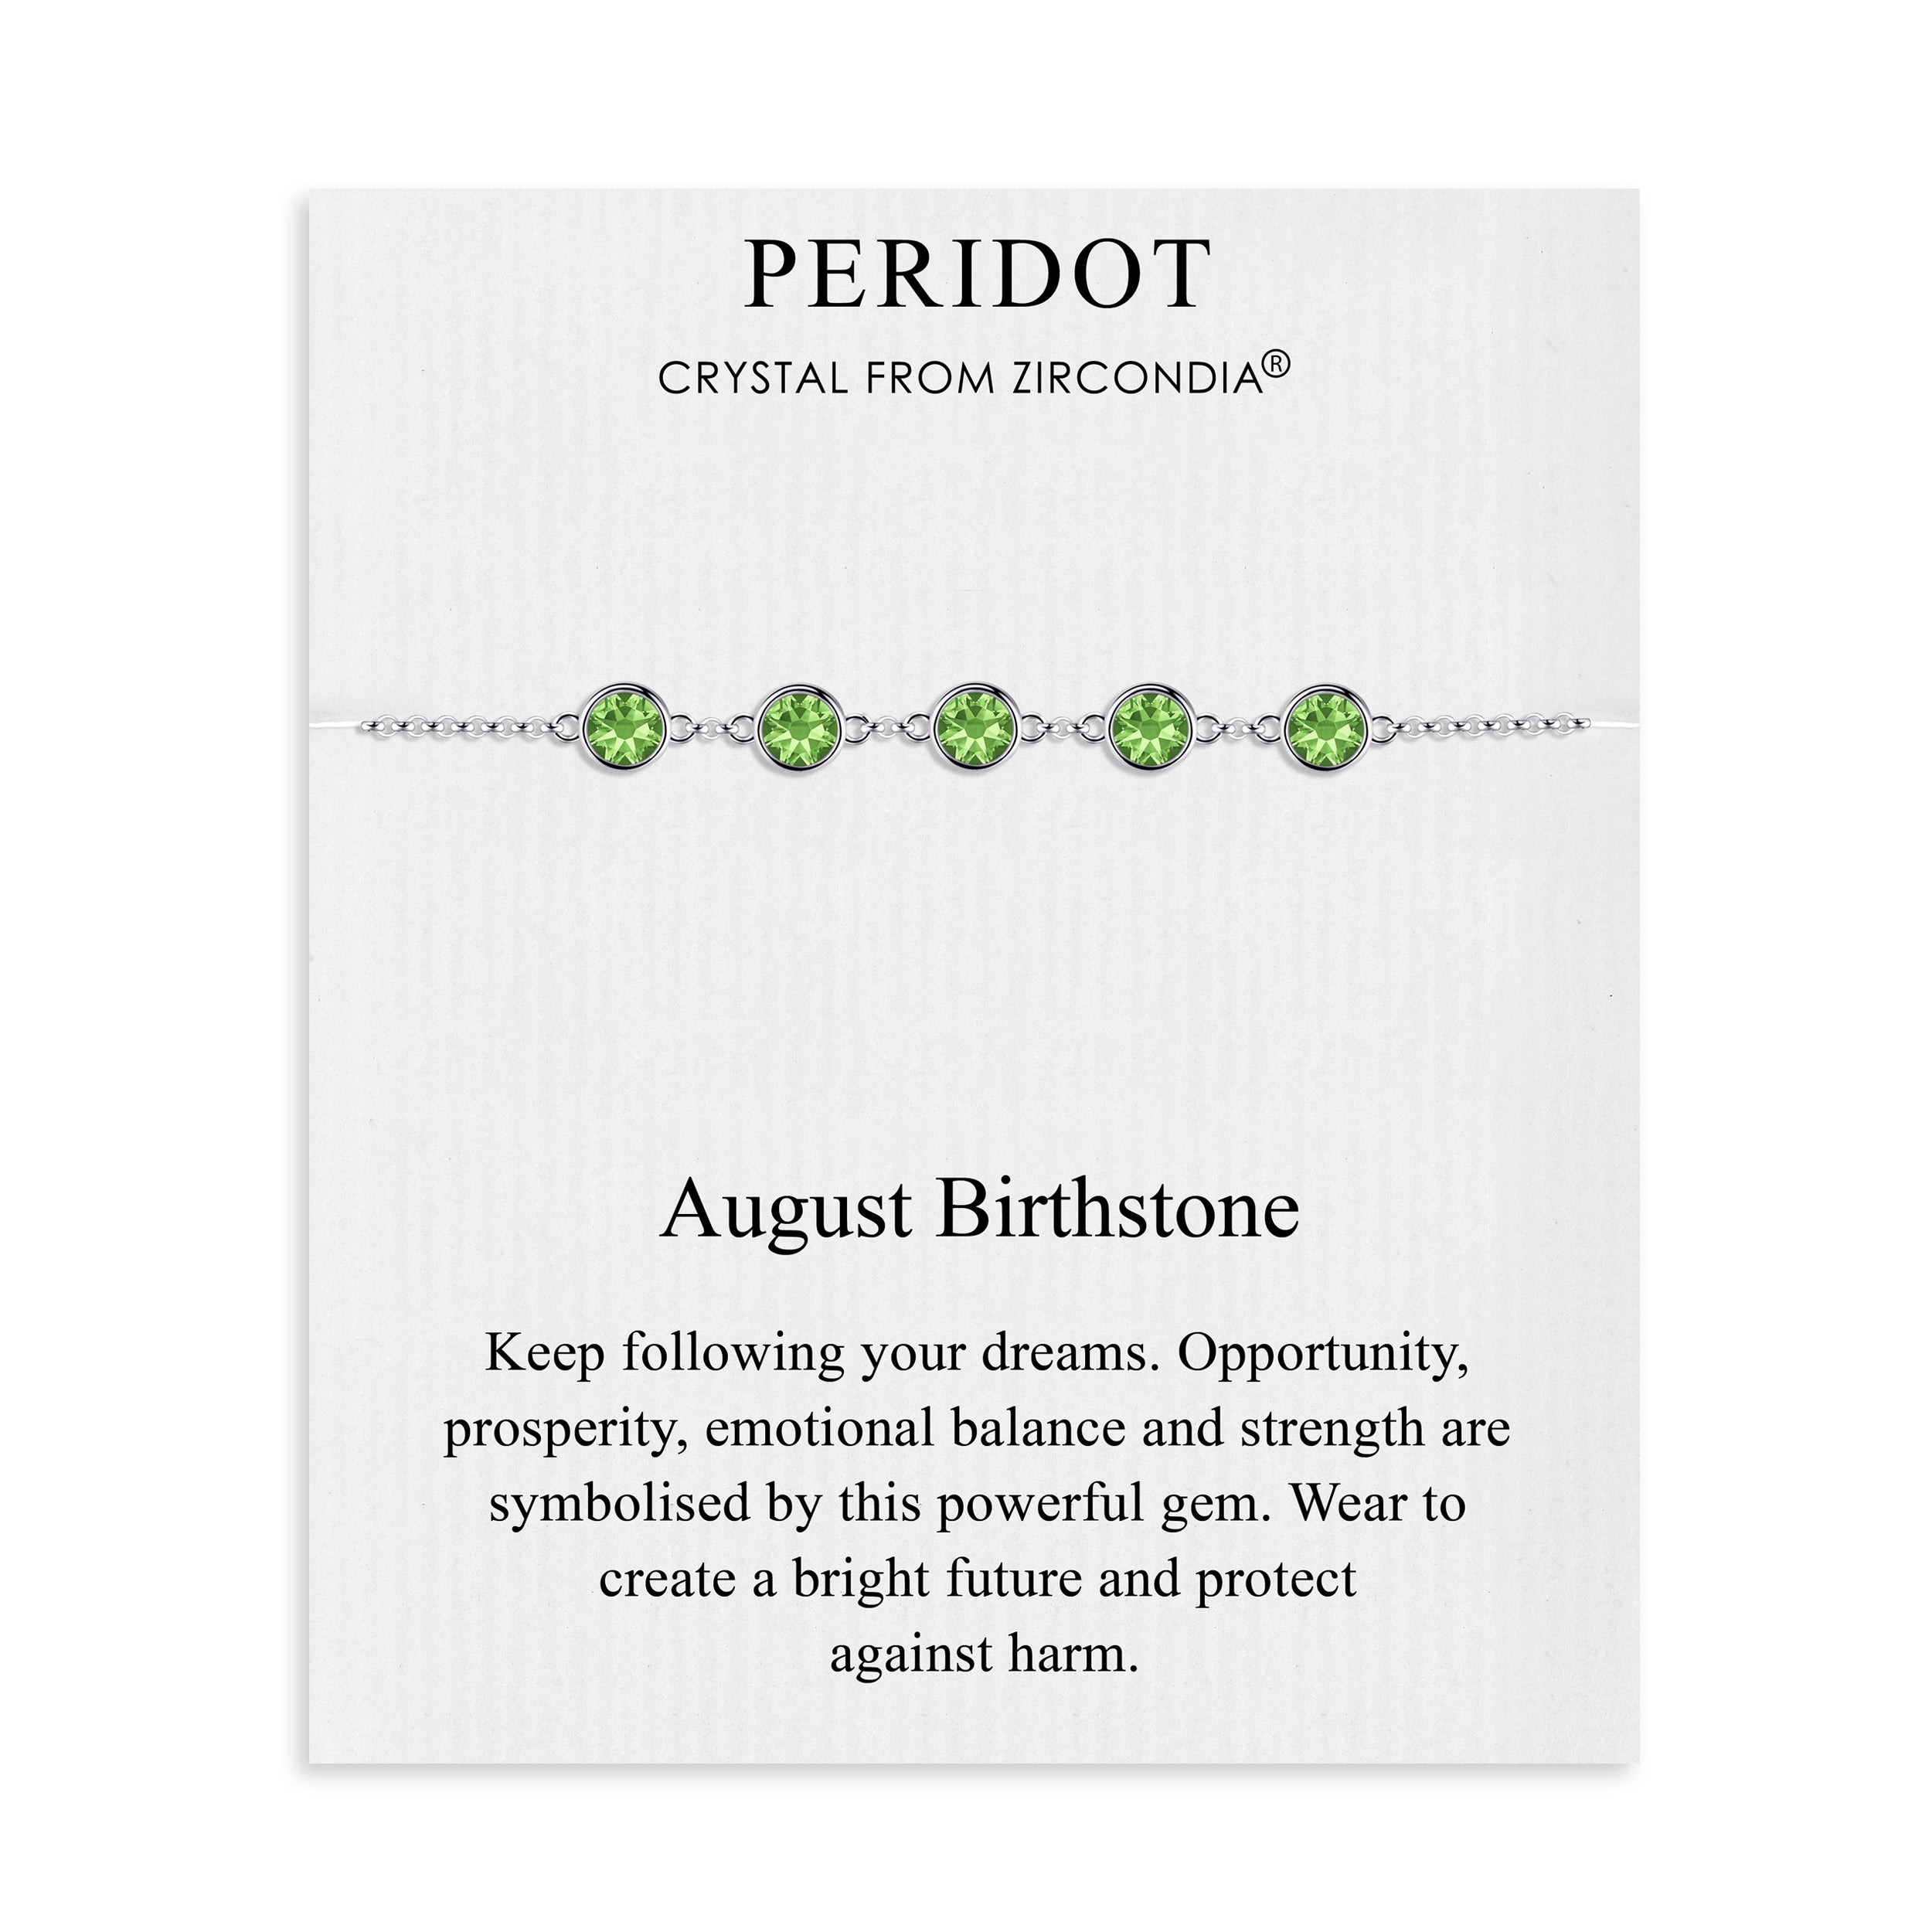 August Birthstone Bracelet Created with Peridot Zircondia® Crystals by Philip Jones Jewellery